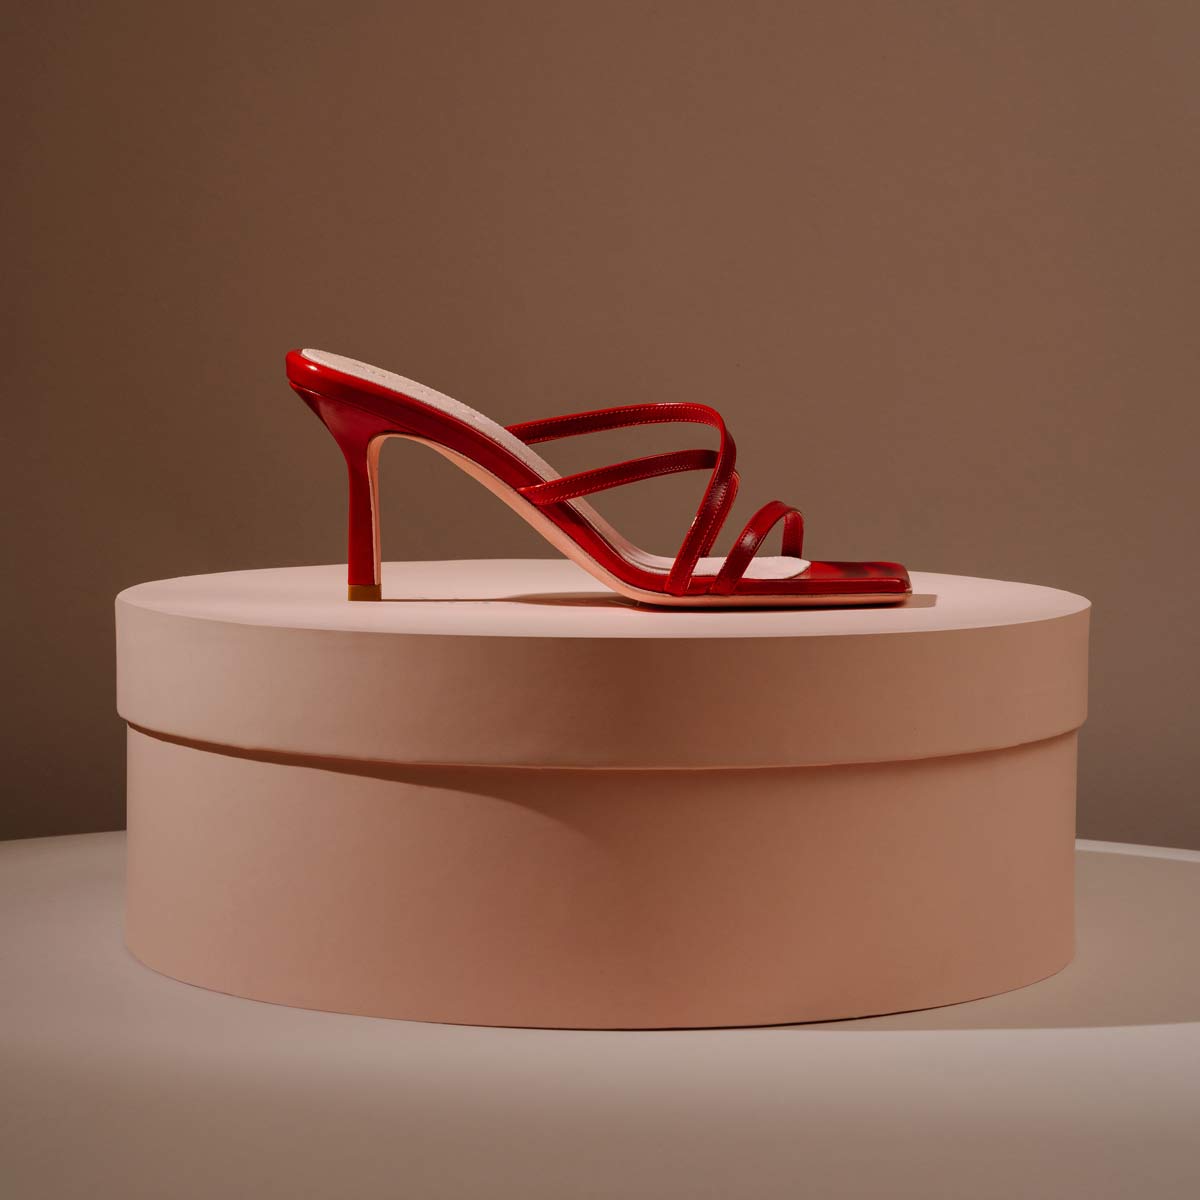 Sandalo Bellini Rosso vista laterale destra packaging rosa